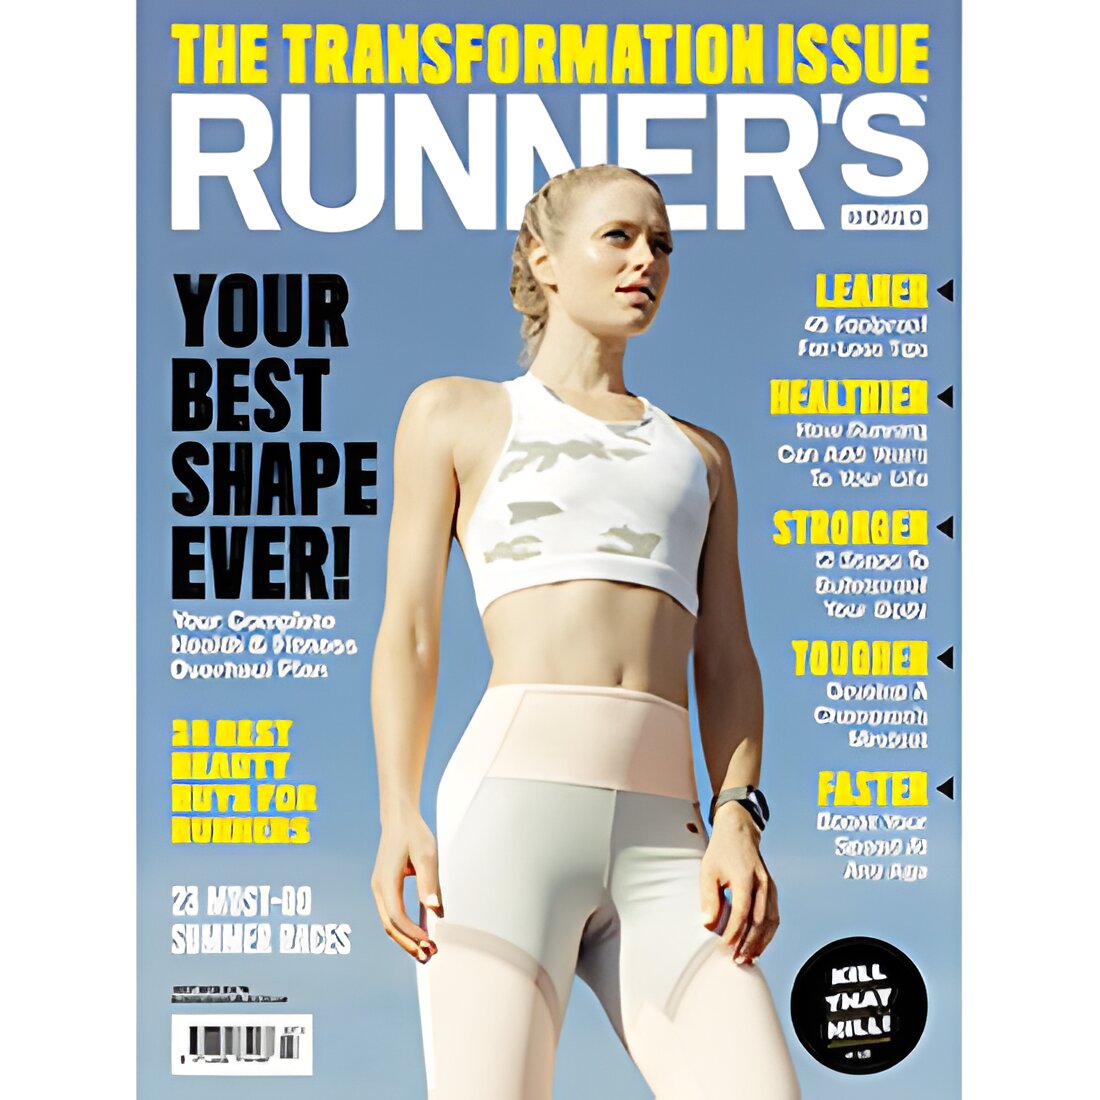 Free 1-Year Subscription To Runner's World Magazine